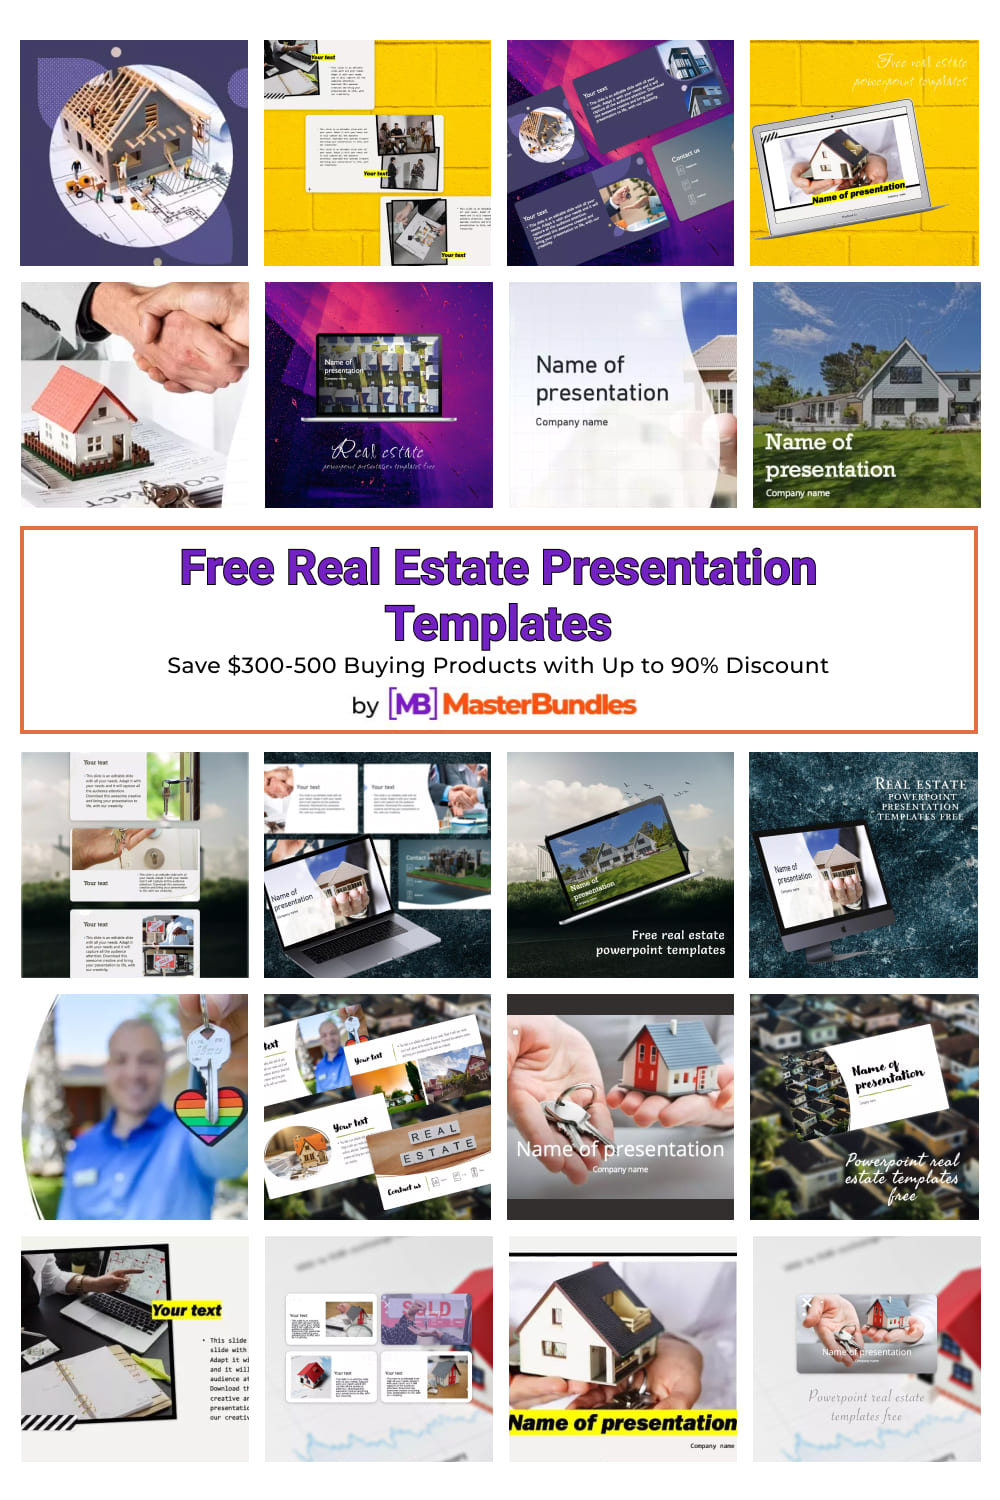 Free Real Estate Presentation Templates for Pinterest.